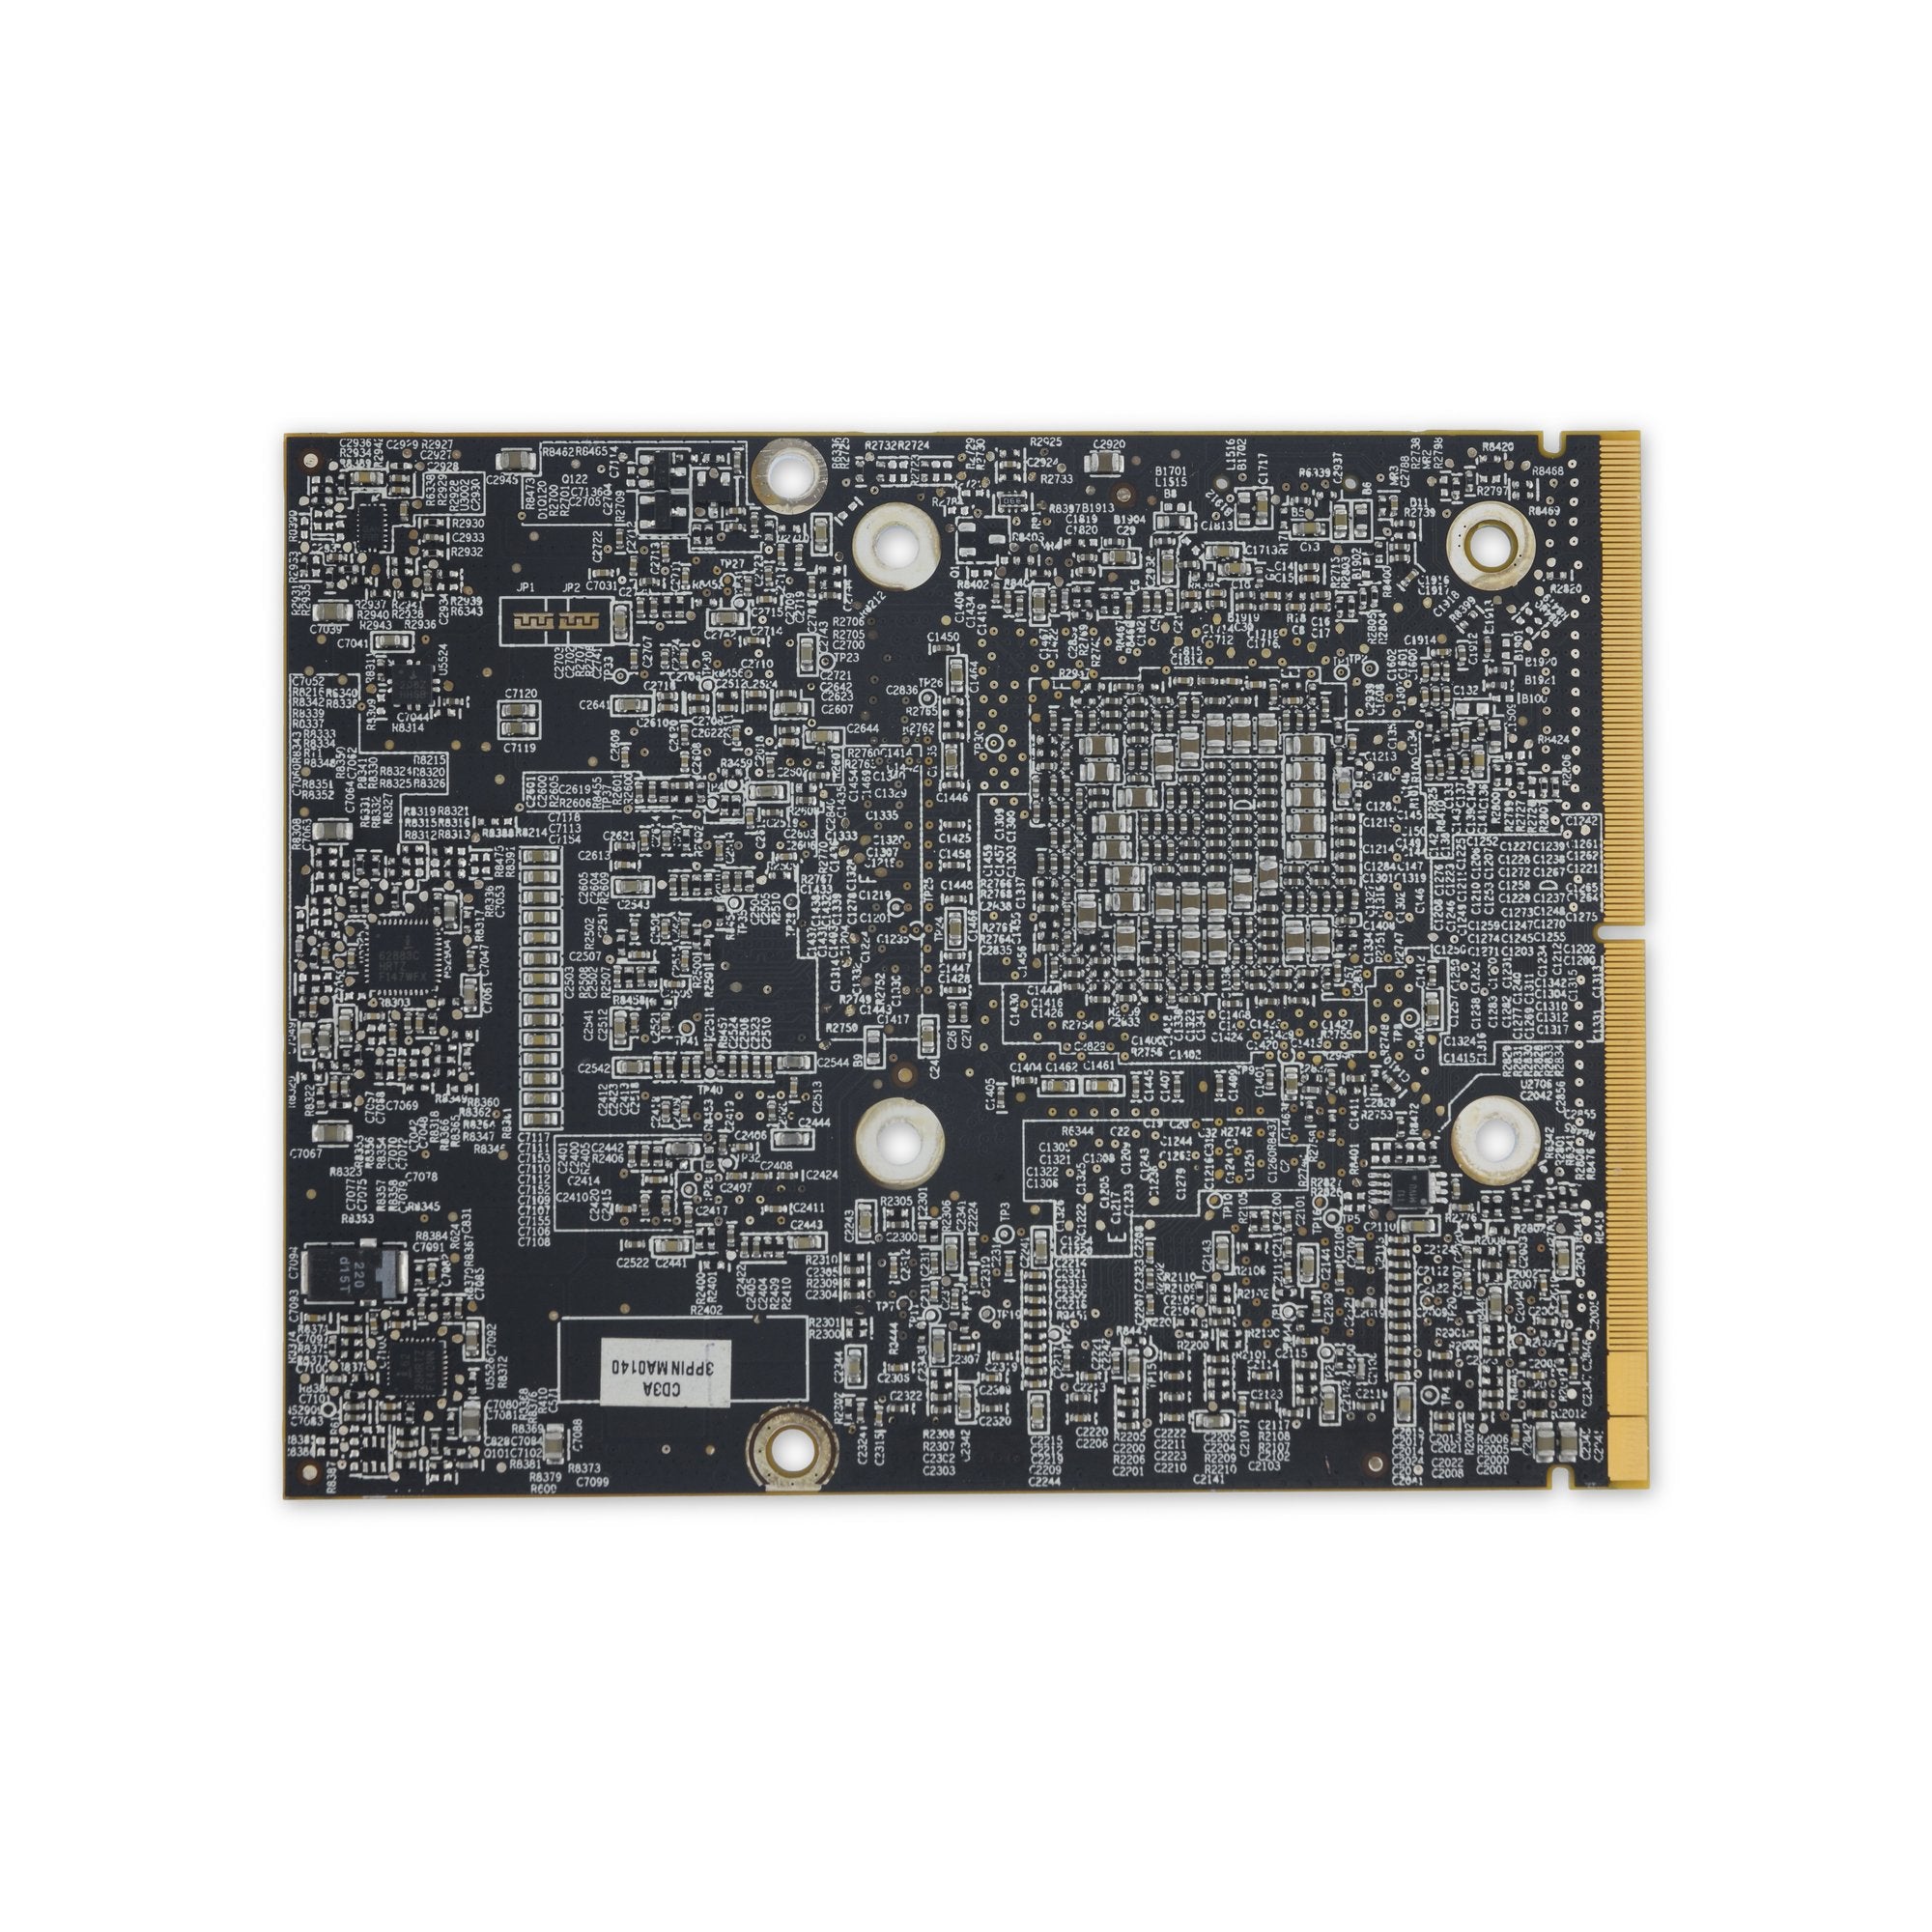 iMac Intel 27" EMC 2429 Radeon HD 6970M Graphics Card 1 GB Used